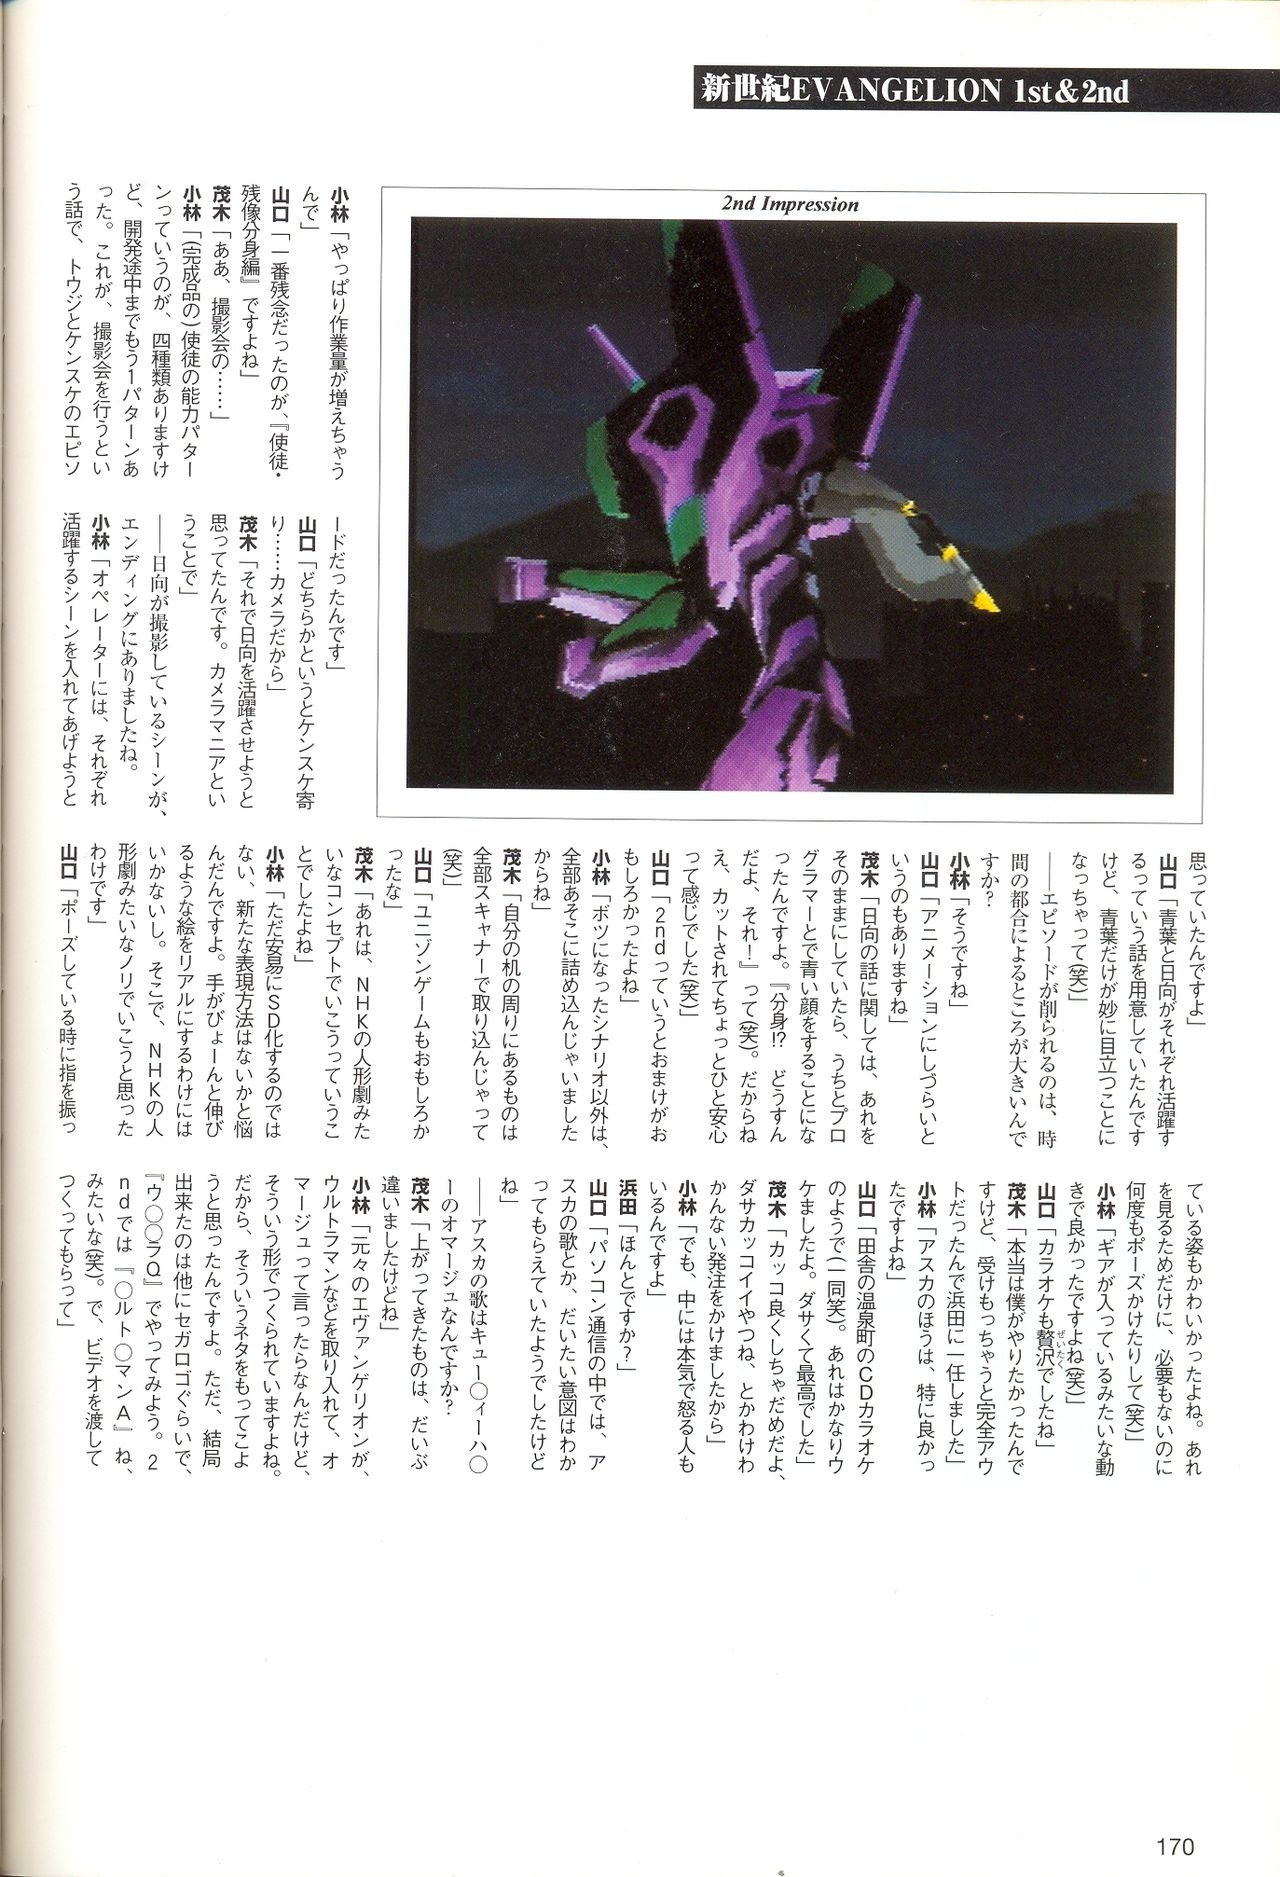 Neon Genesis Evangelion - 2nd Impression Sega Saturn Perfect Guide 169